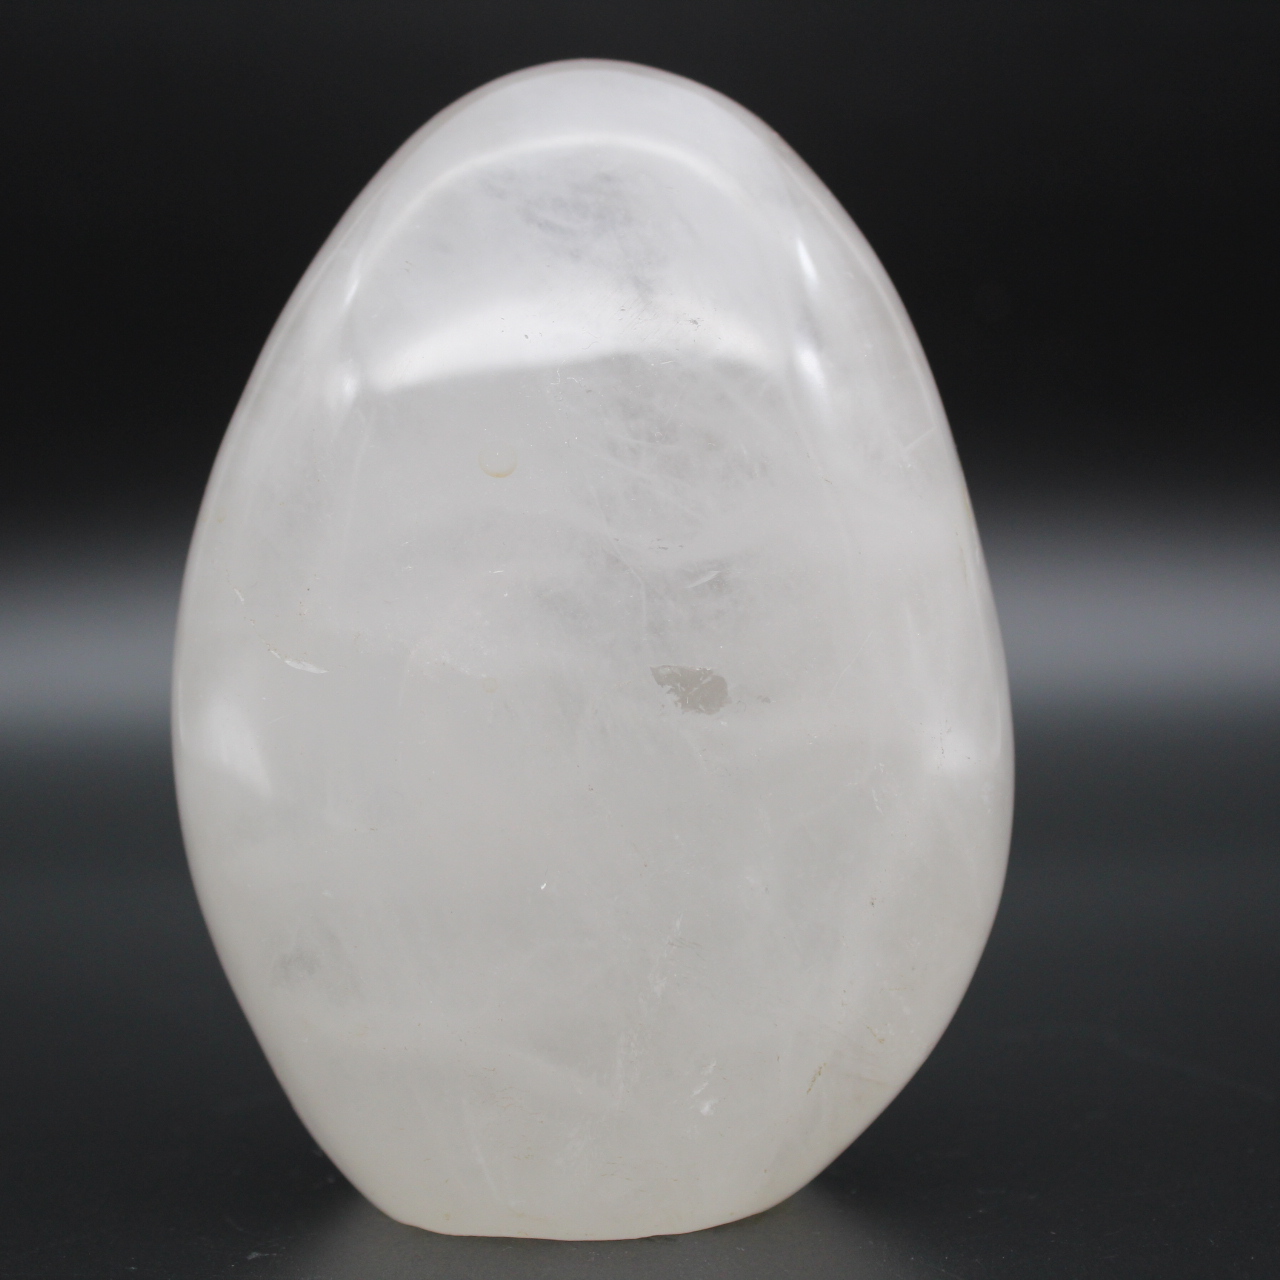 Pierre de quartz cristal de roche naturel